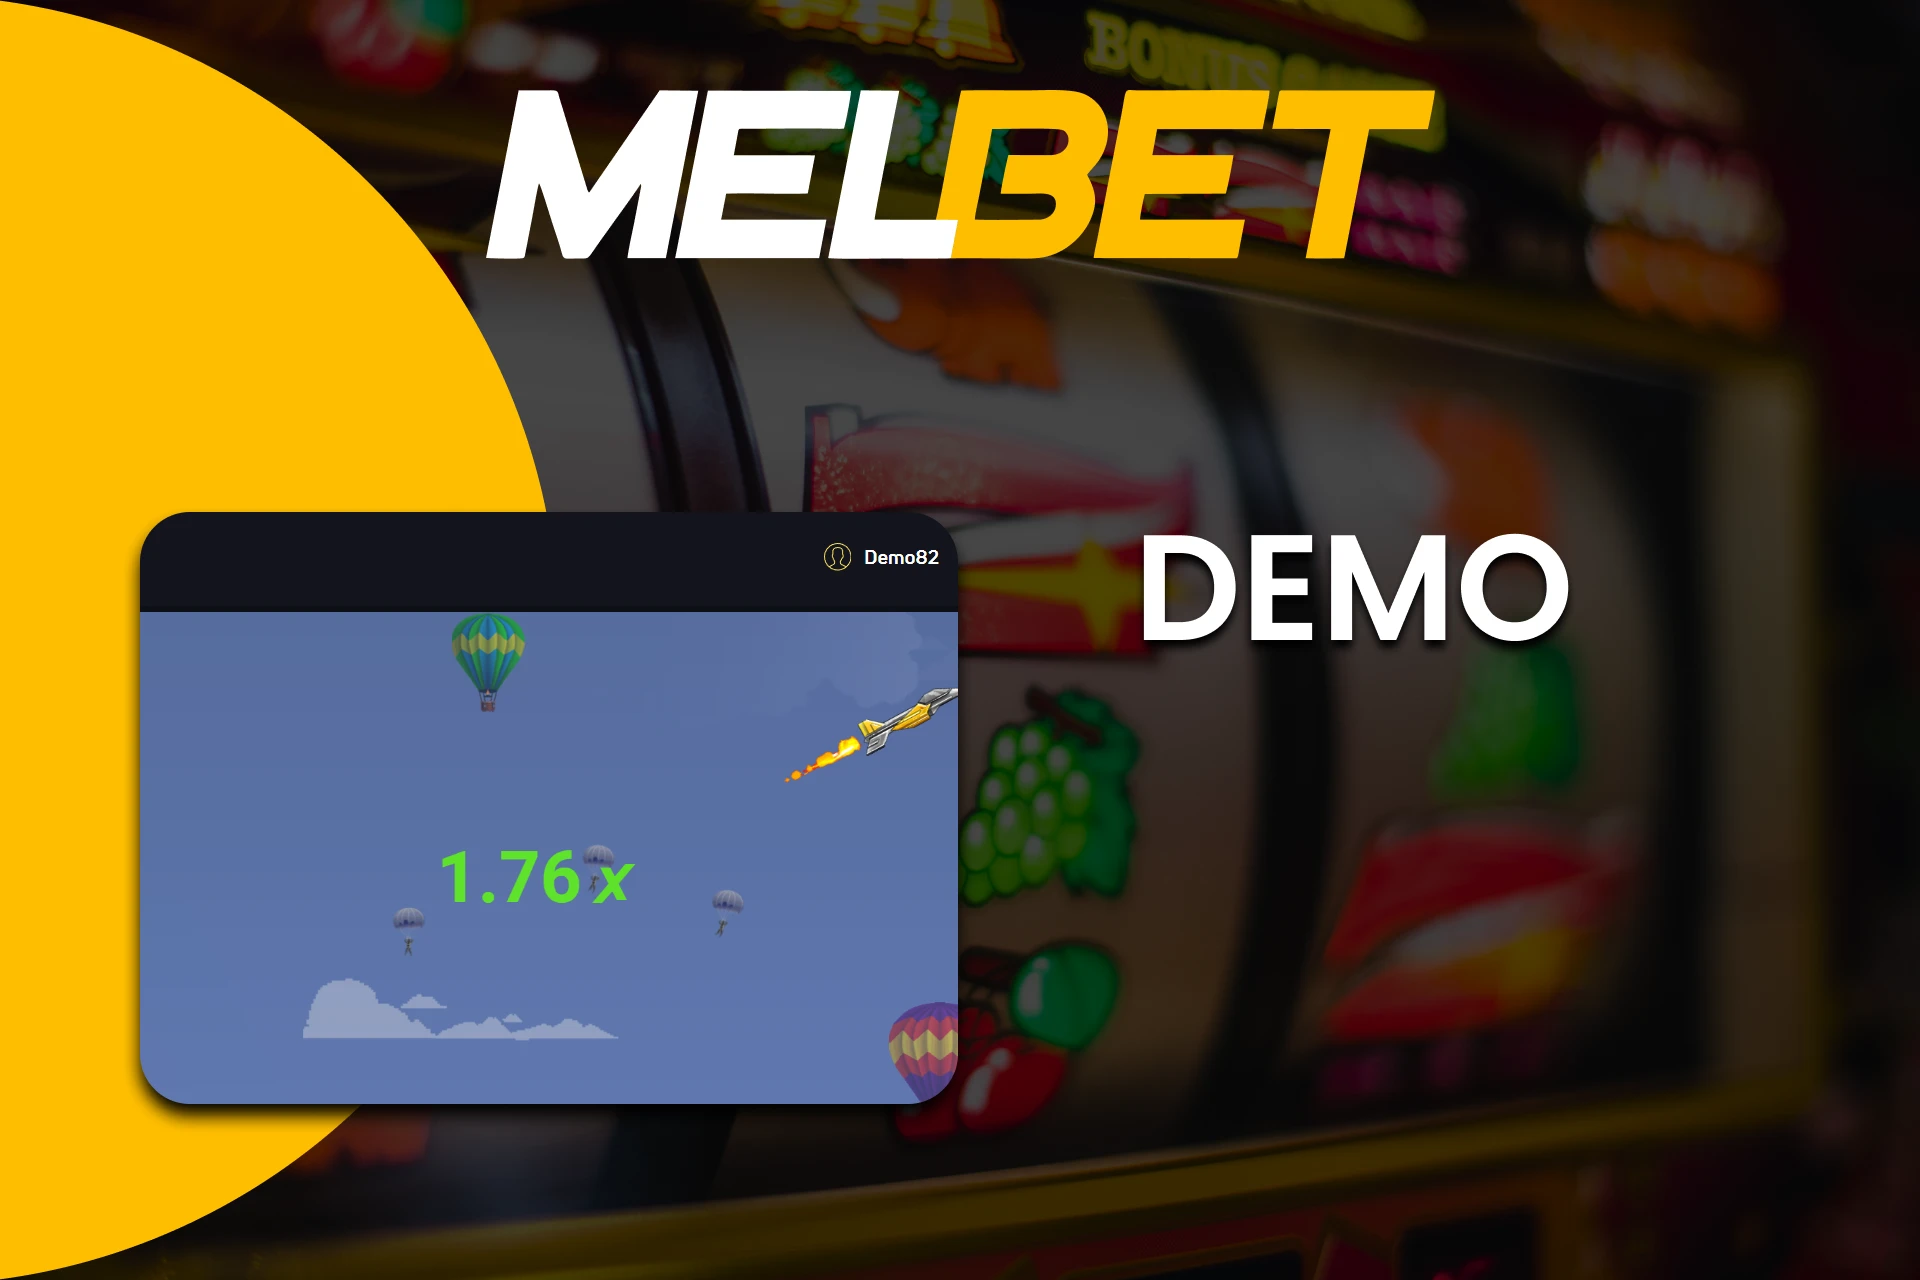 Practice demo versions of crash games on Melbet.